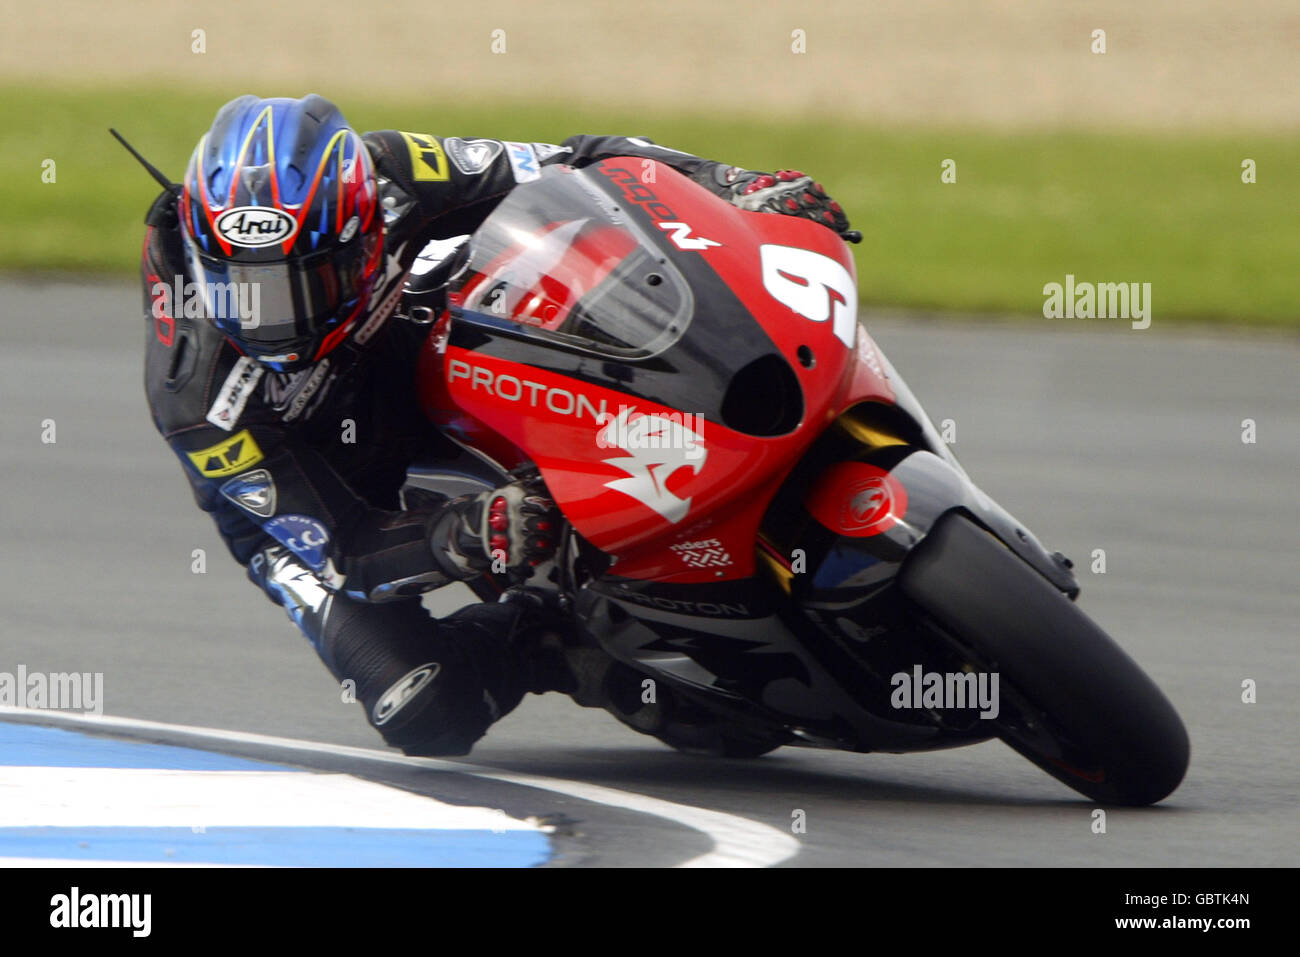 Motorcycling - British Grand Prix - Moto GP - Qualifying. Nobuatsu Aoki in action Stock Photo